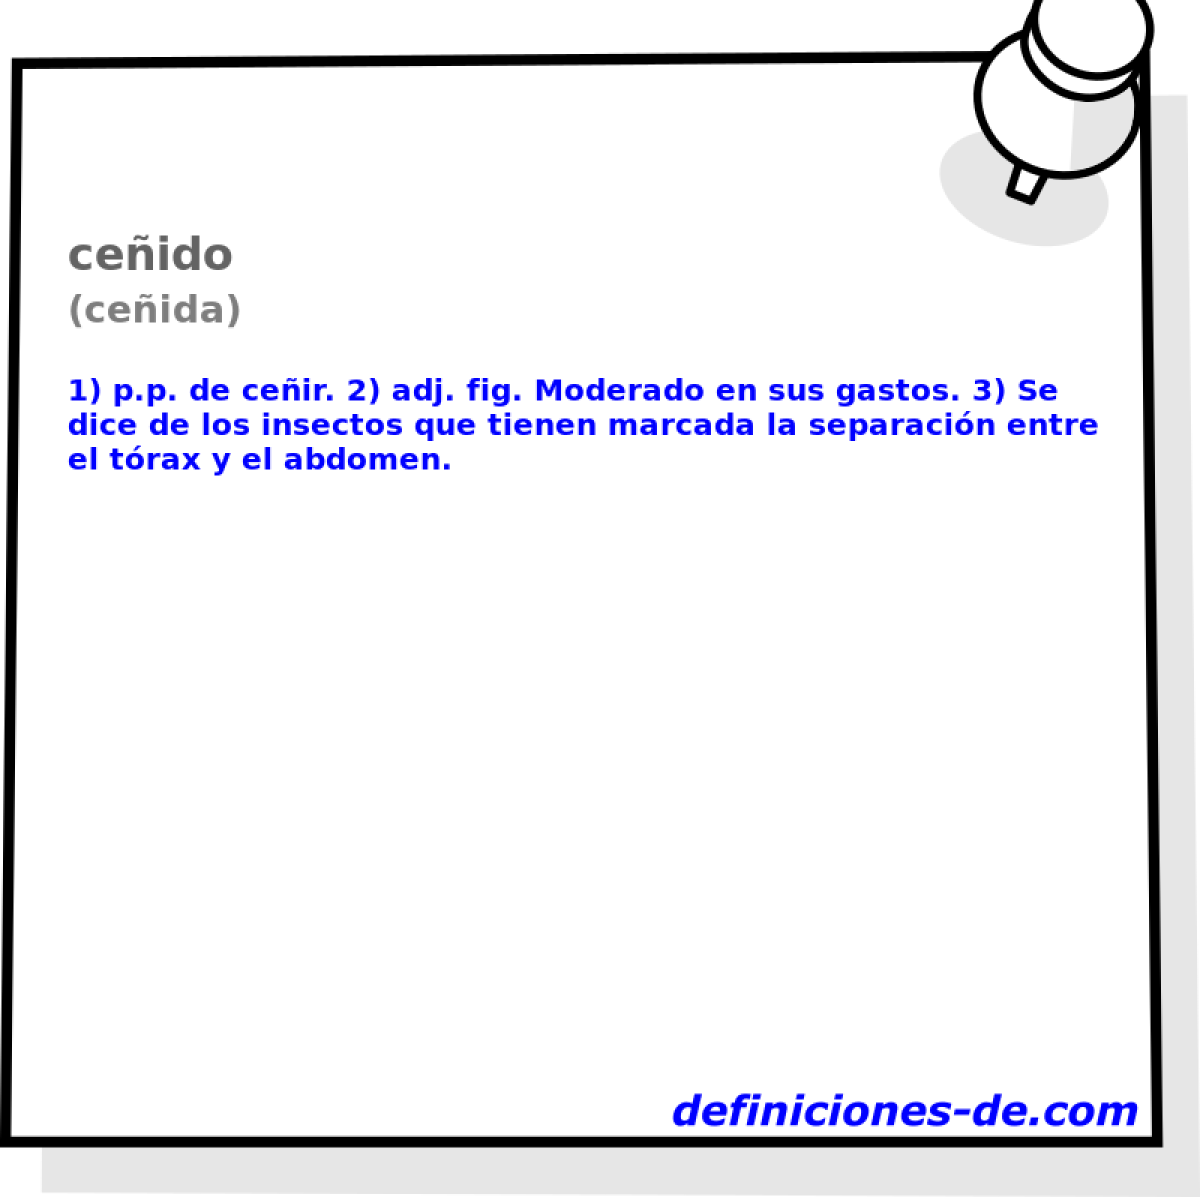 ceido (ceida)